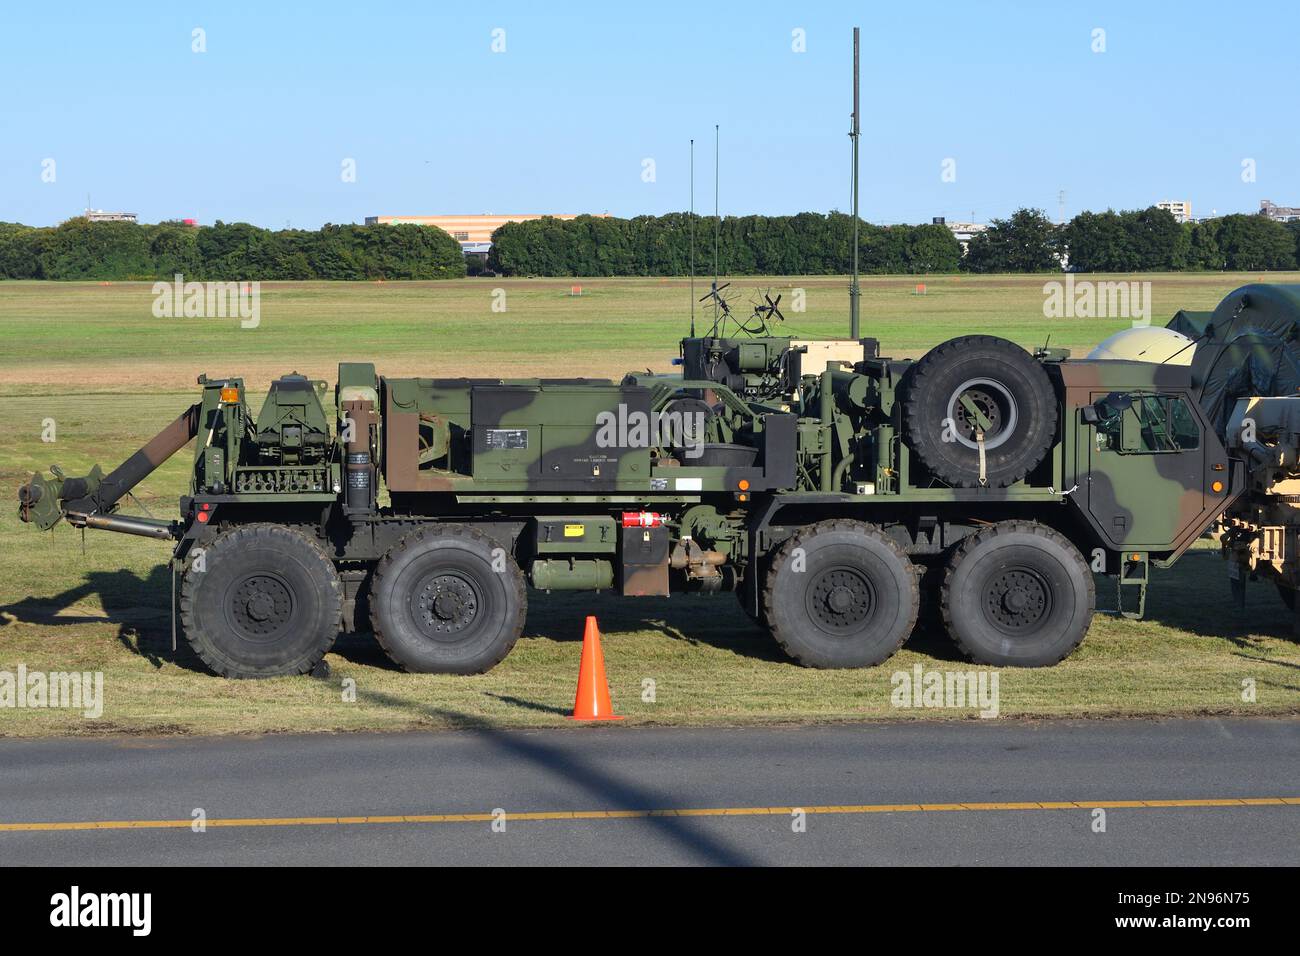 Präfektur Kanagawa, Japan - 25. Oktober 2020: United States Army Oshkosh HEMTT (Heavy Expanded Mobility Tactical Truck) M984 Wracker. Stockfoto